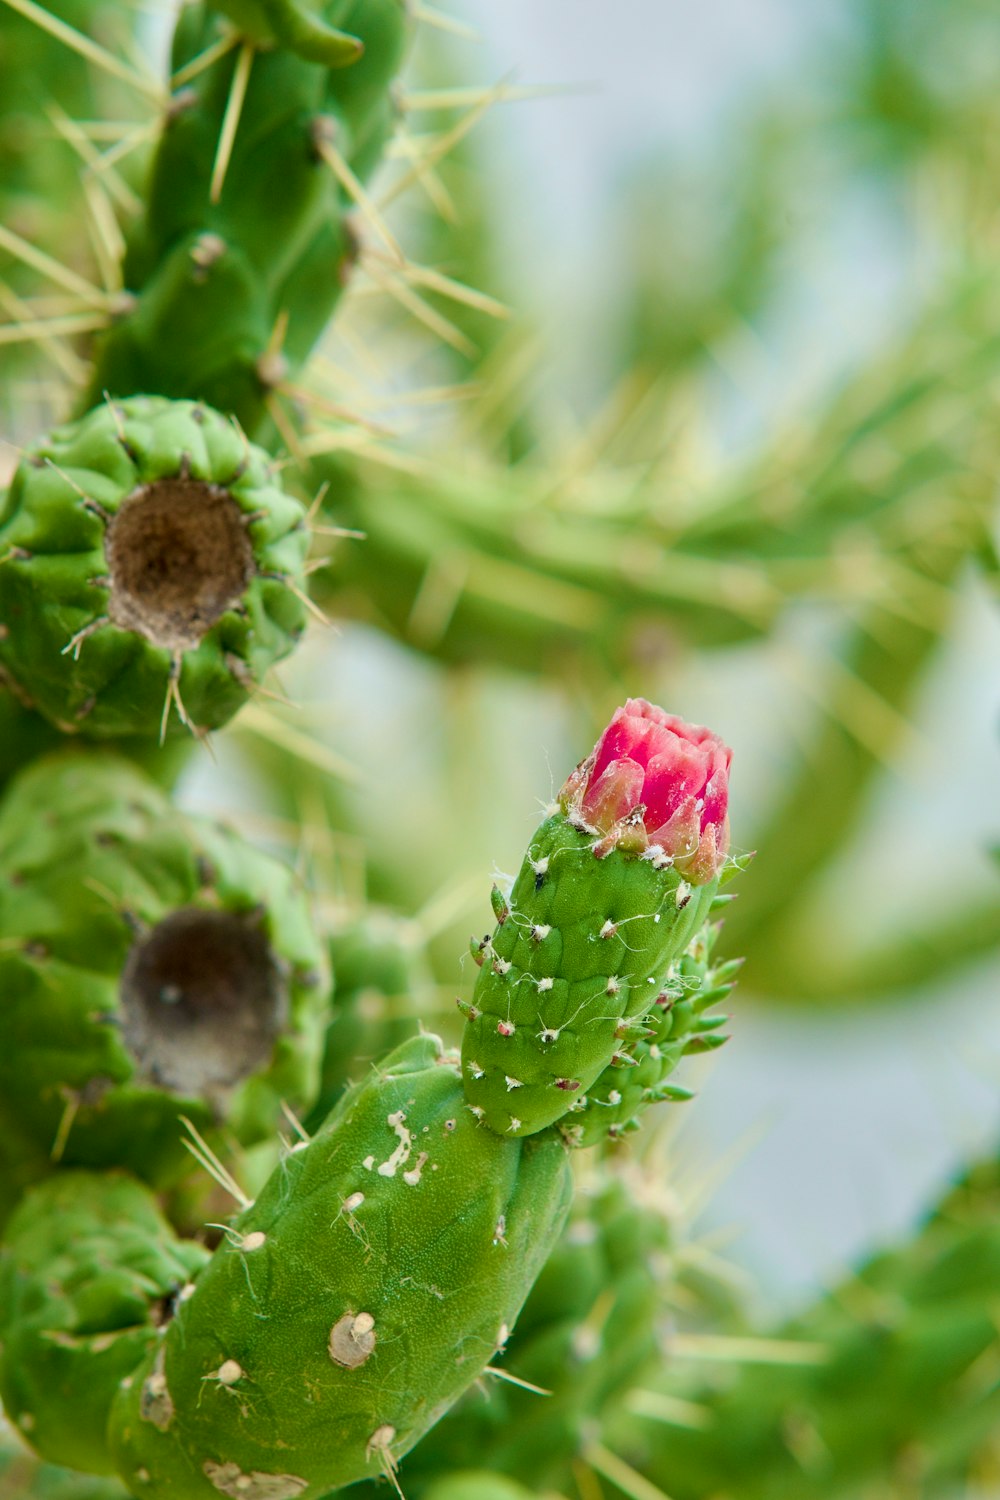 Nahaufnahme eines grünen Kaktus mit rosa Blüte